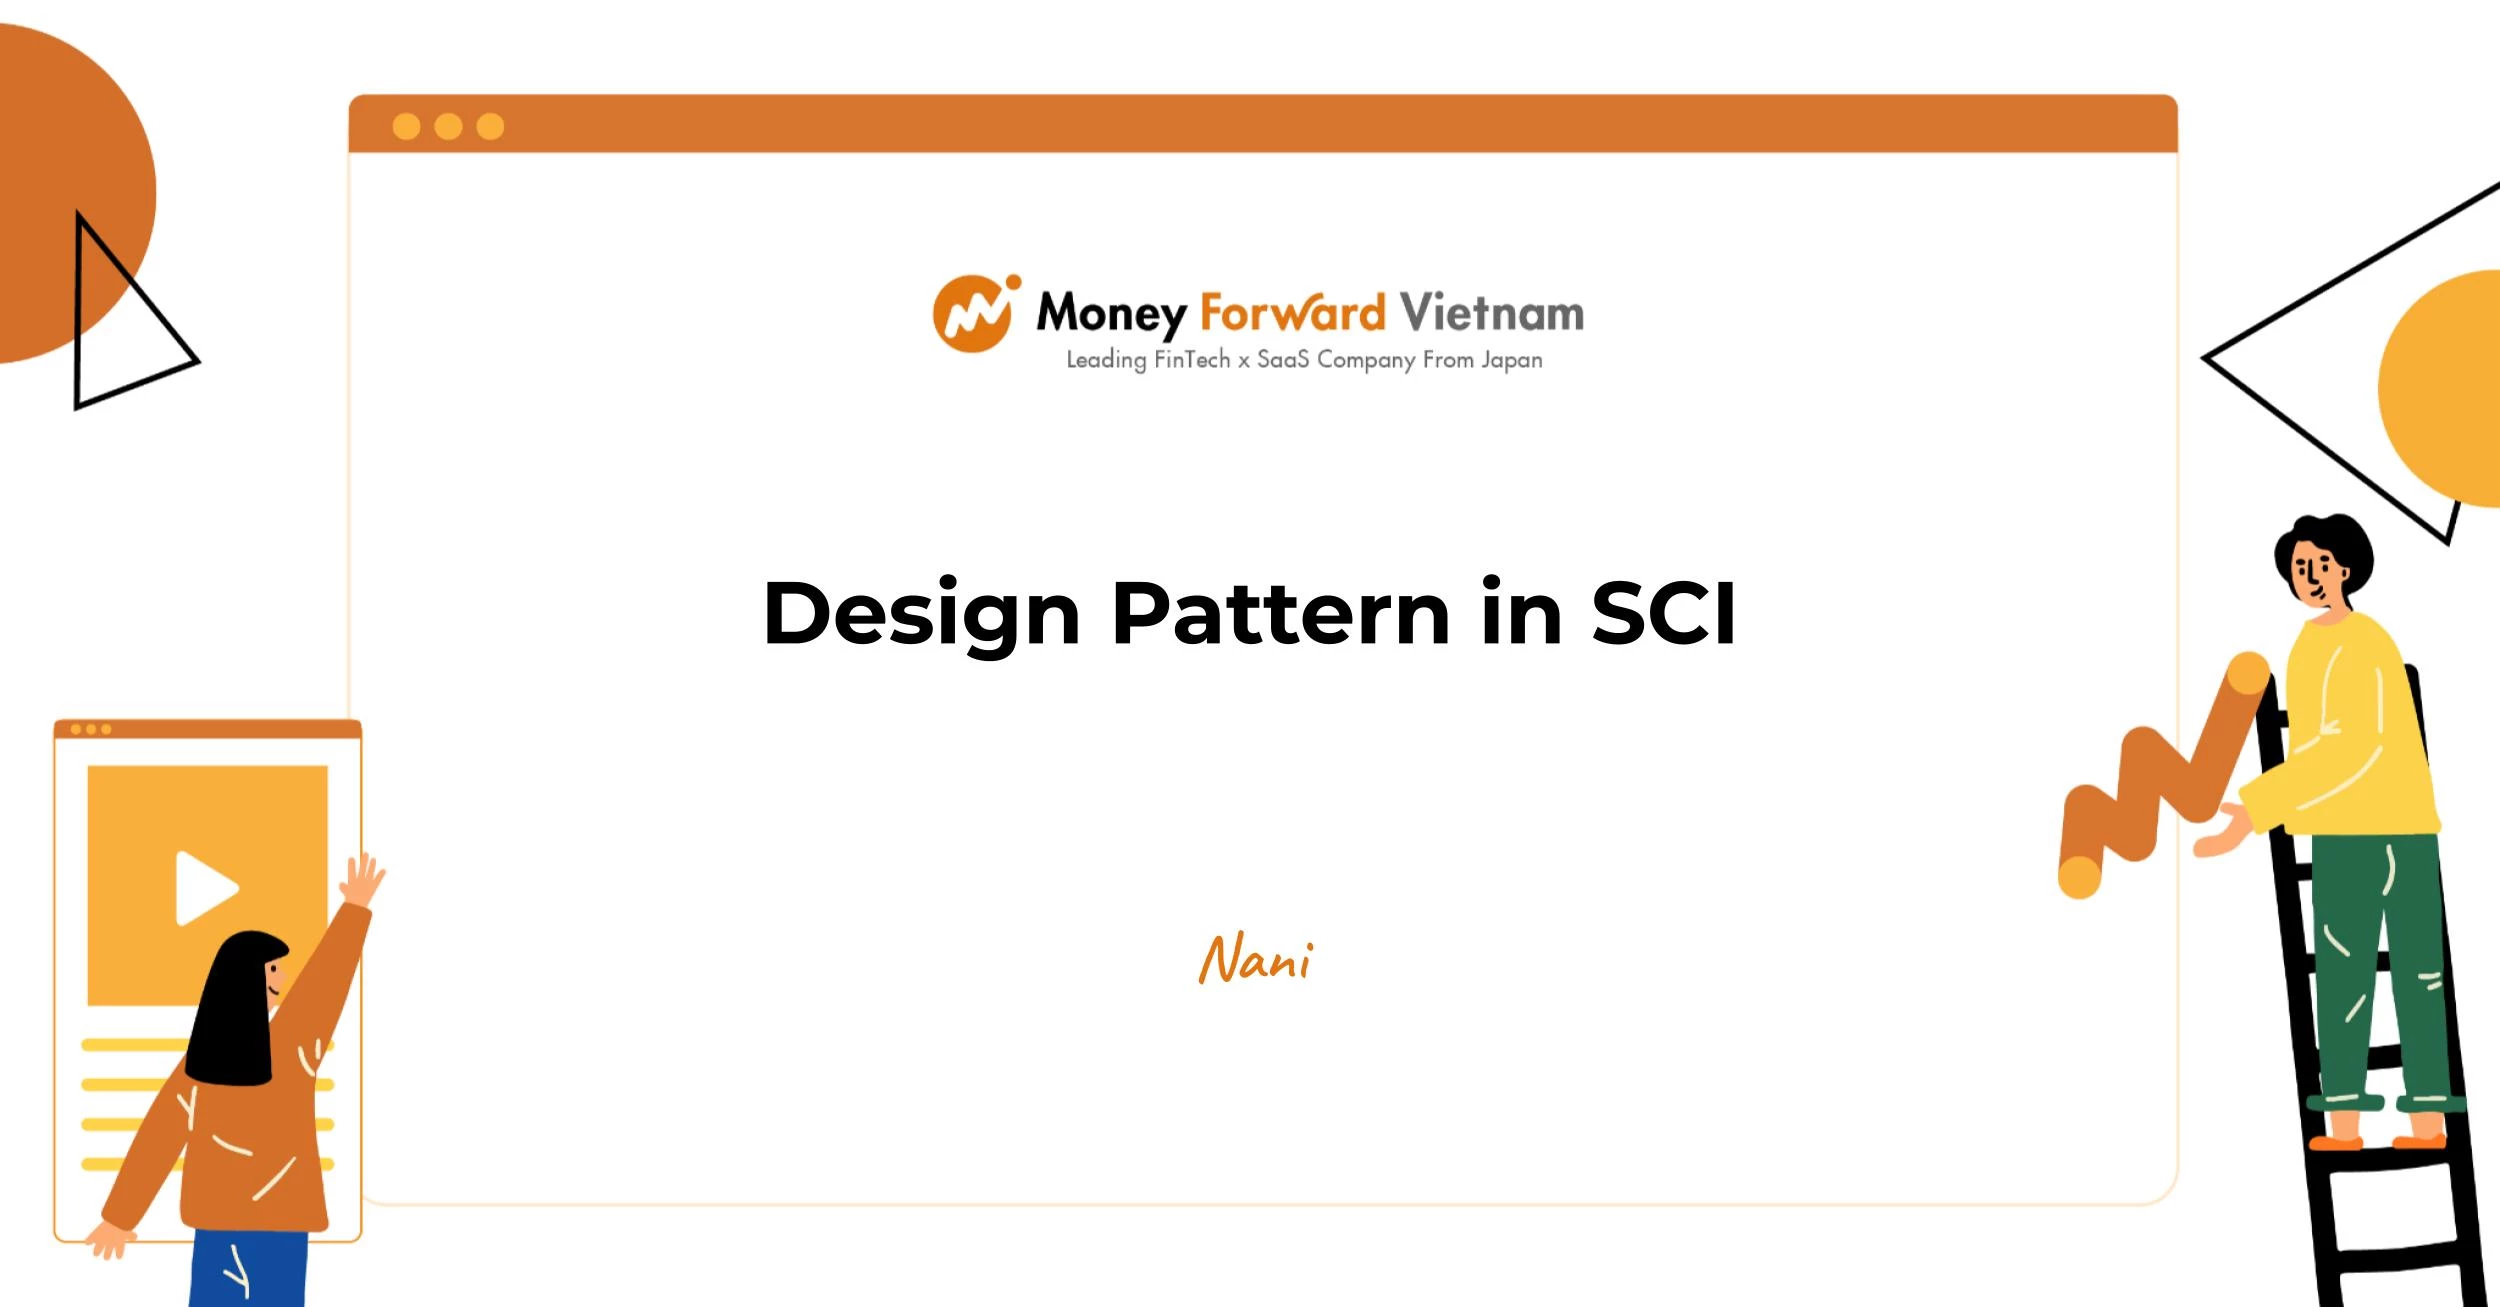 Design pattern in SCI